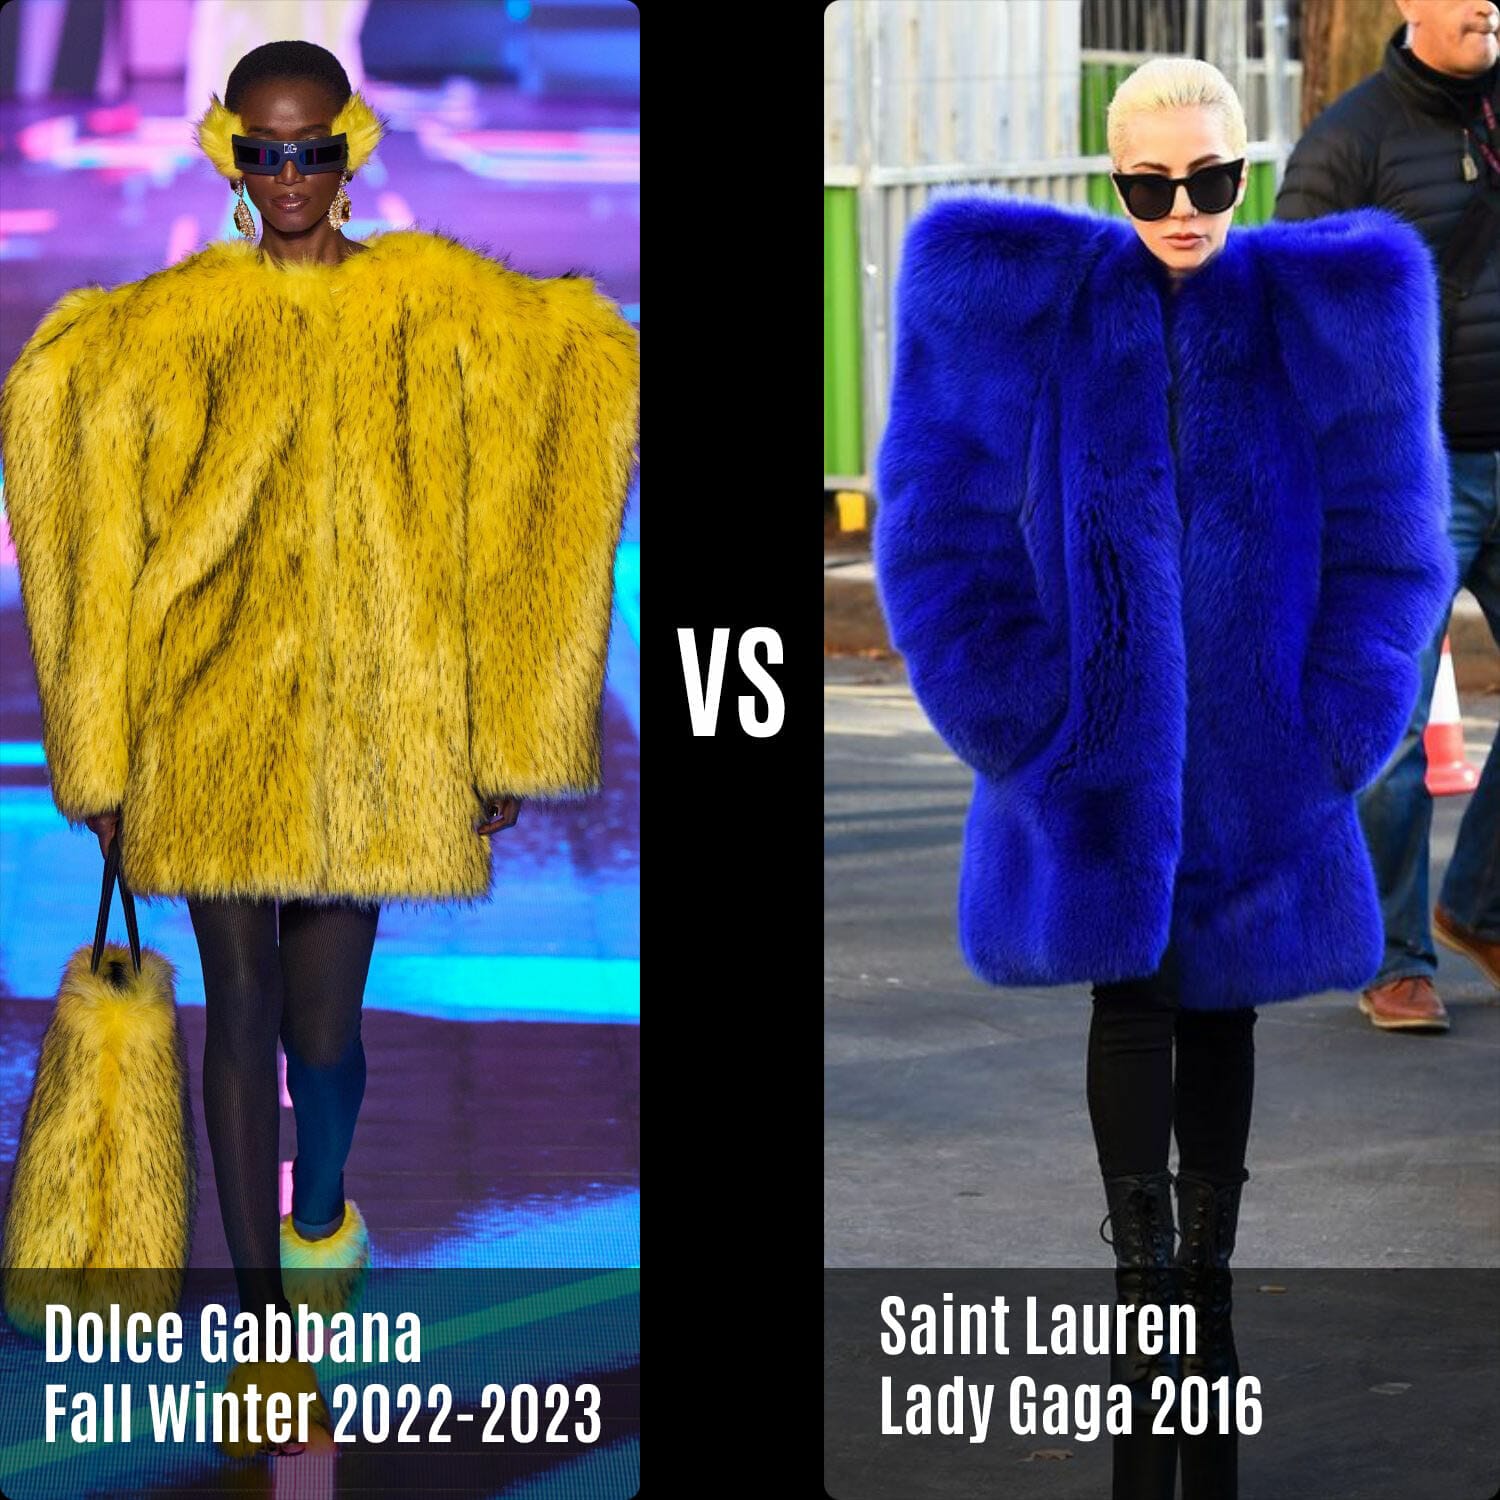 Dolce Gabbana Fall Winter 2022-2023 vs Saint Lauren 2016 for Lady Gaga